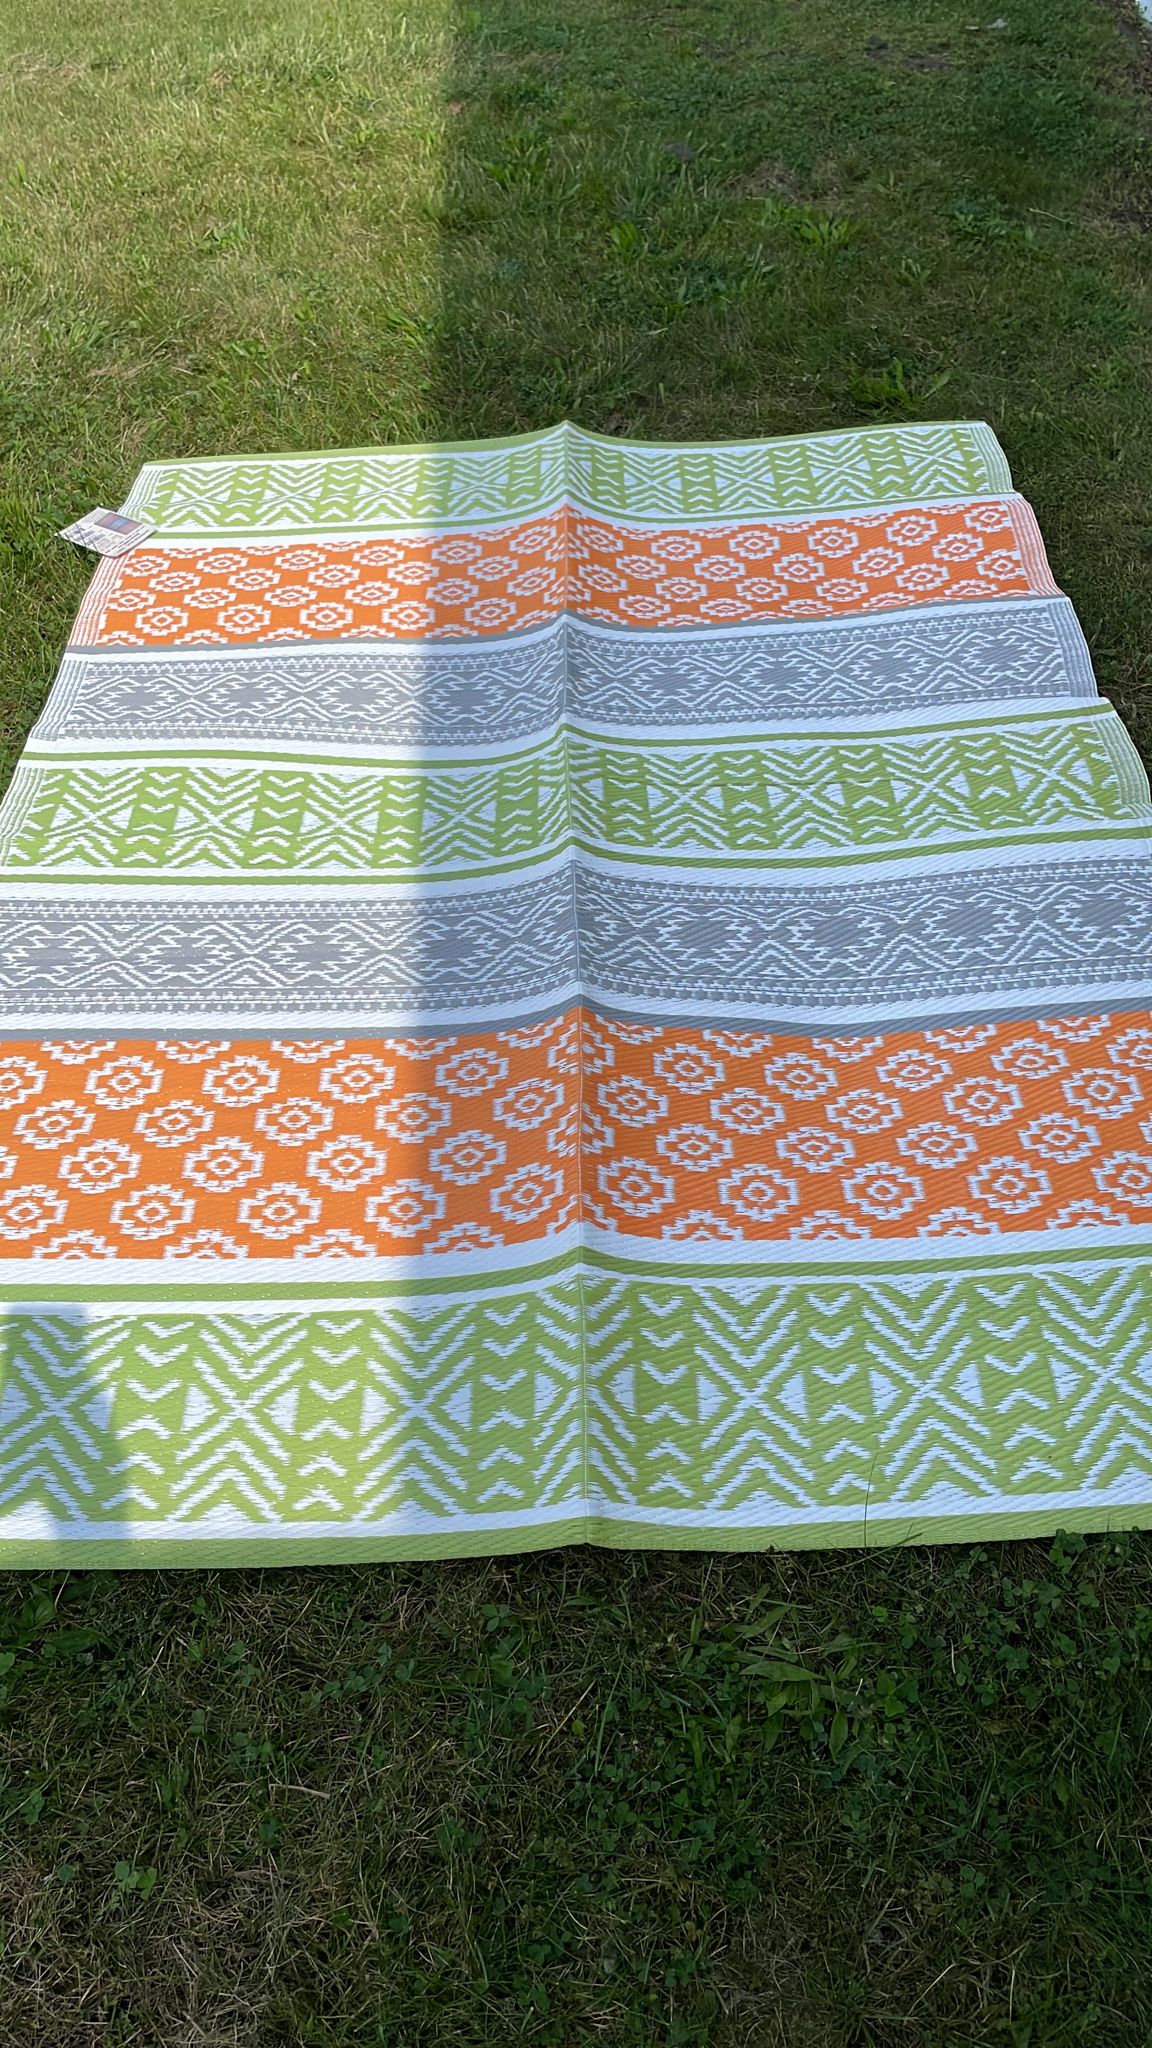 6'x9' Outdoor rugs Patio Plastic Straw waterproof Grey,Teal camper